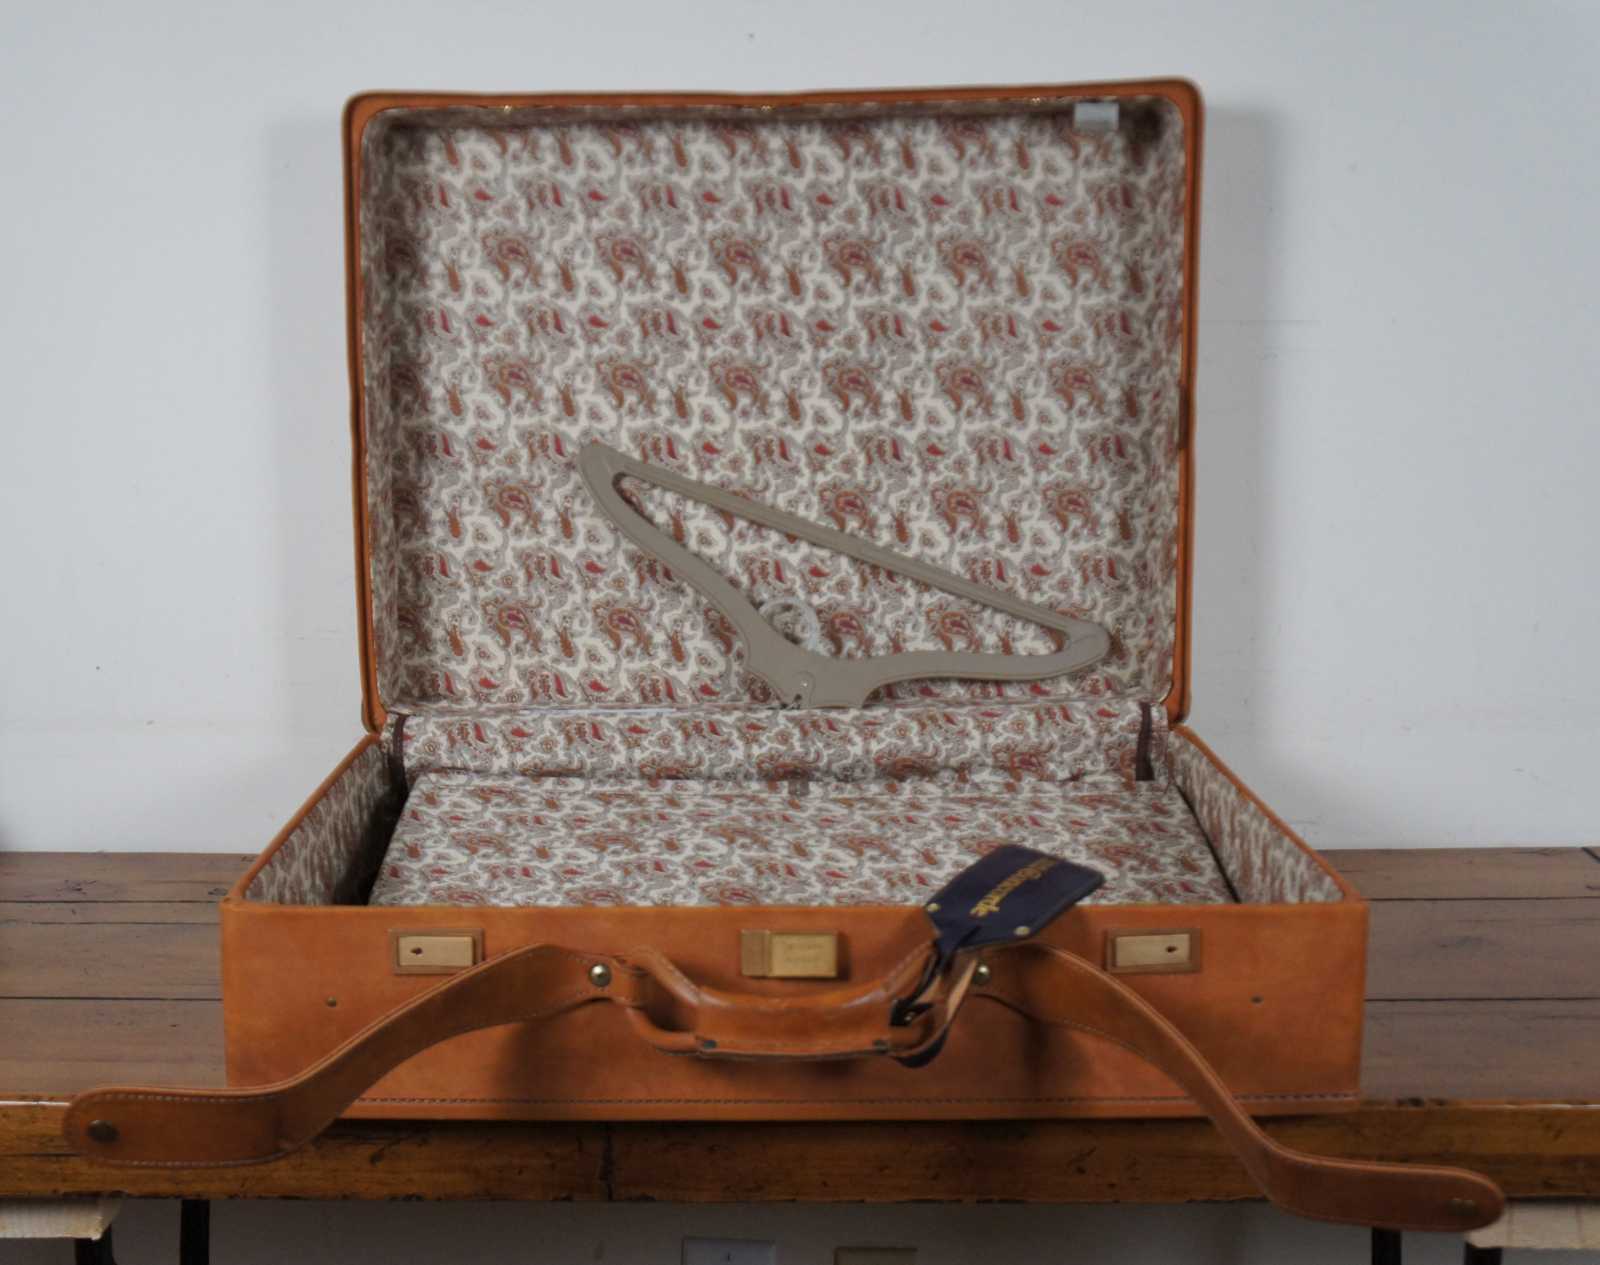 vintage luggage, Hartmann leather look suitcase w/ keys, British